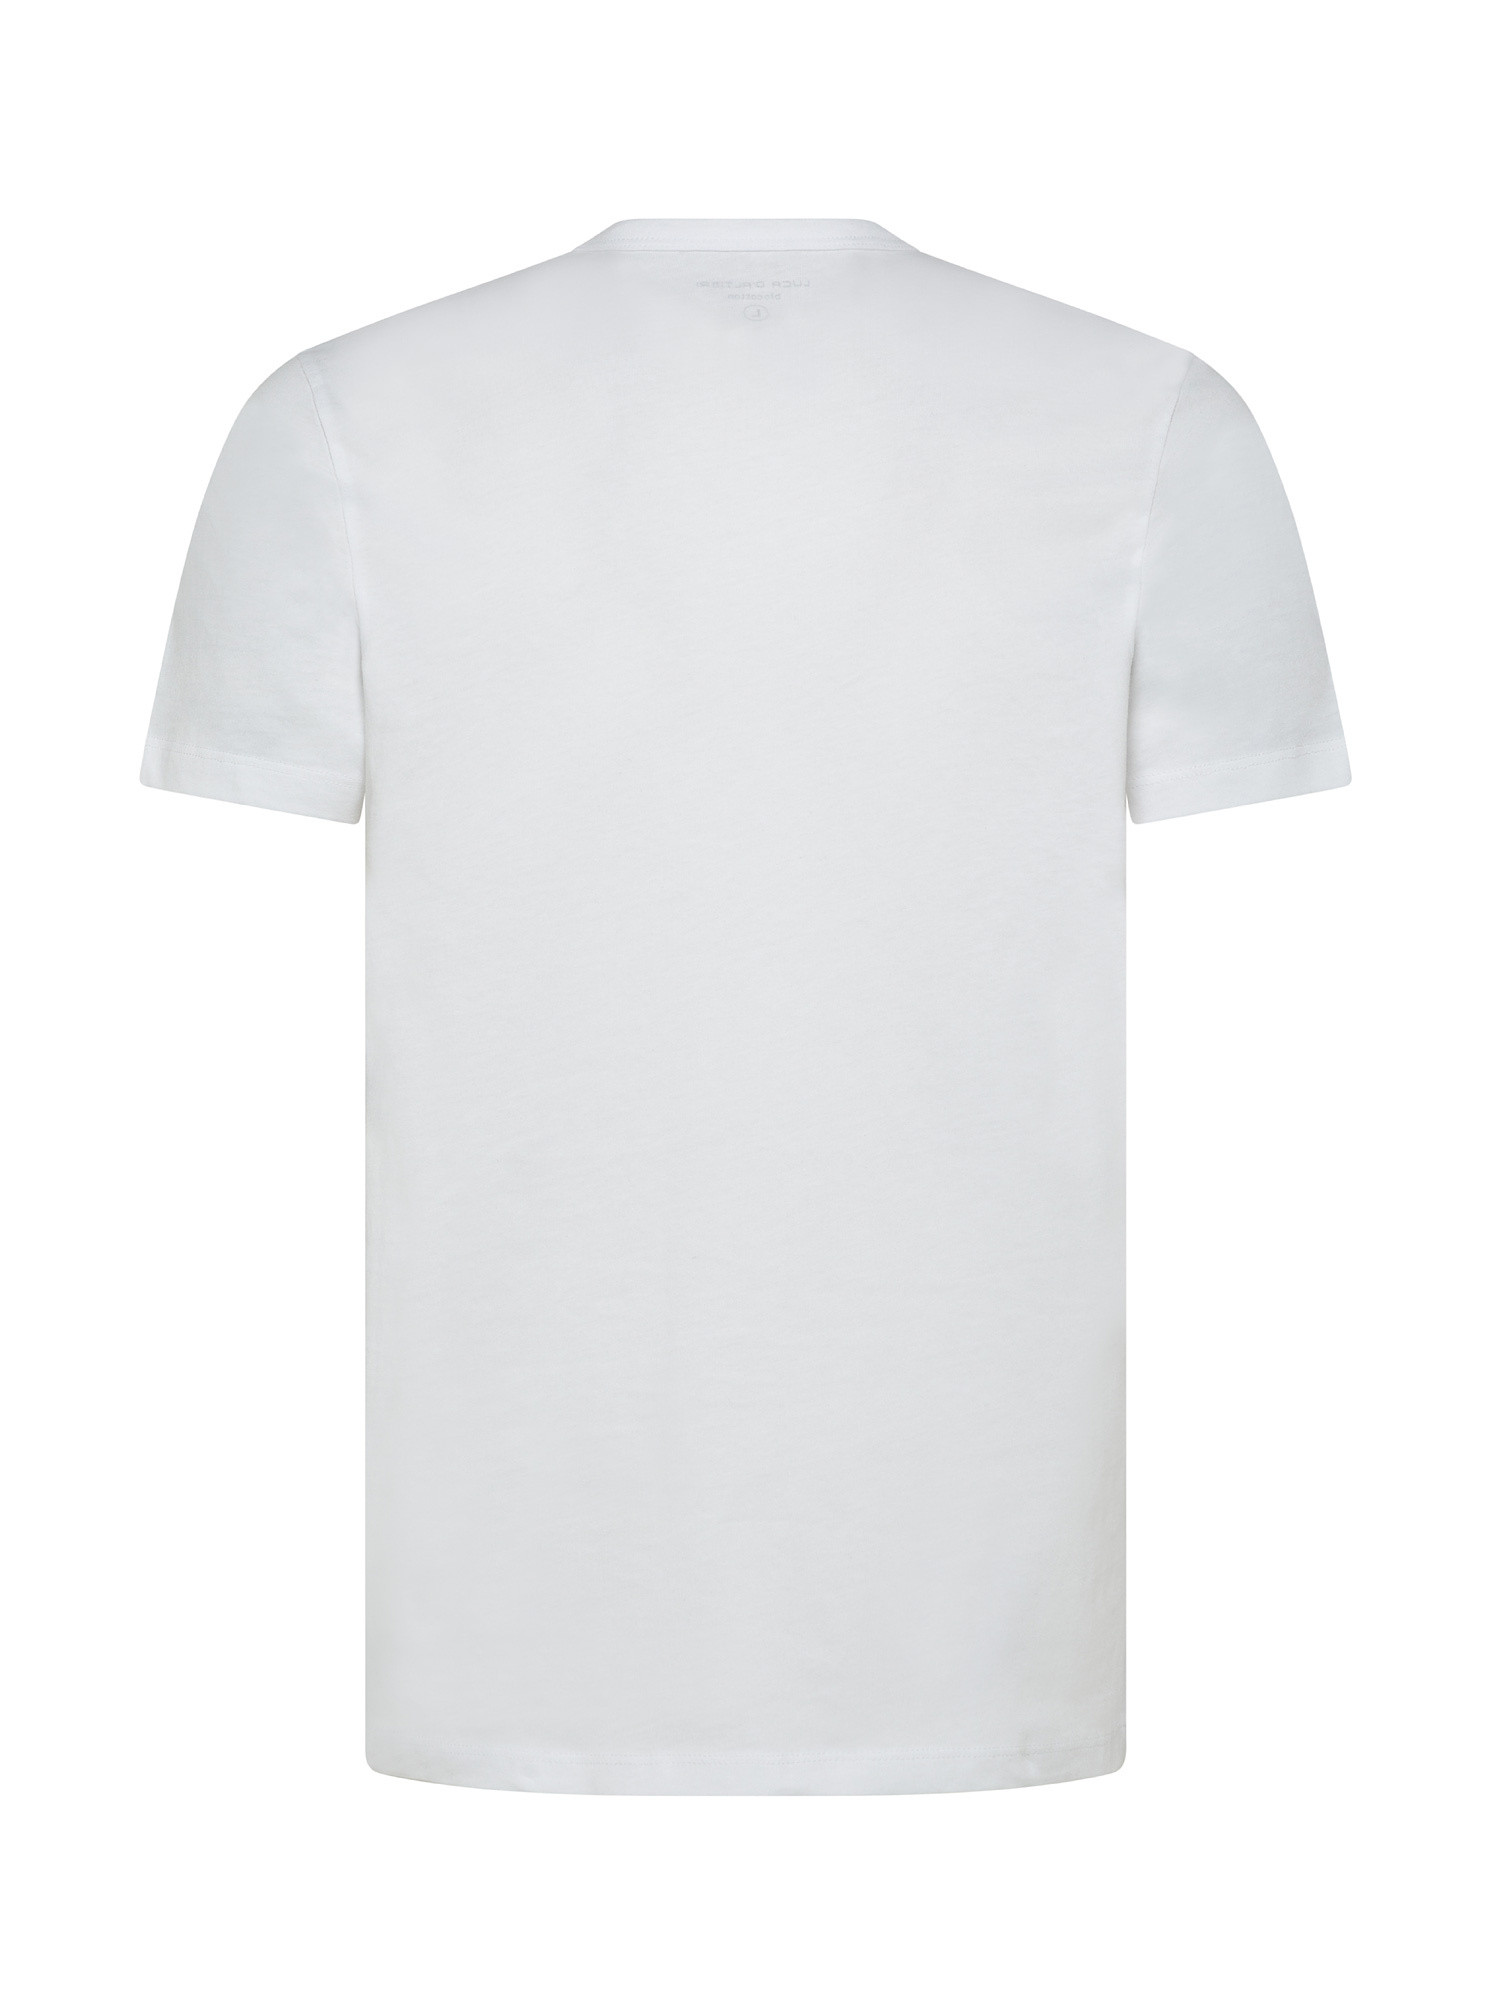 Set da 2 t-shirt, Bianco, large image number 1